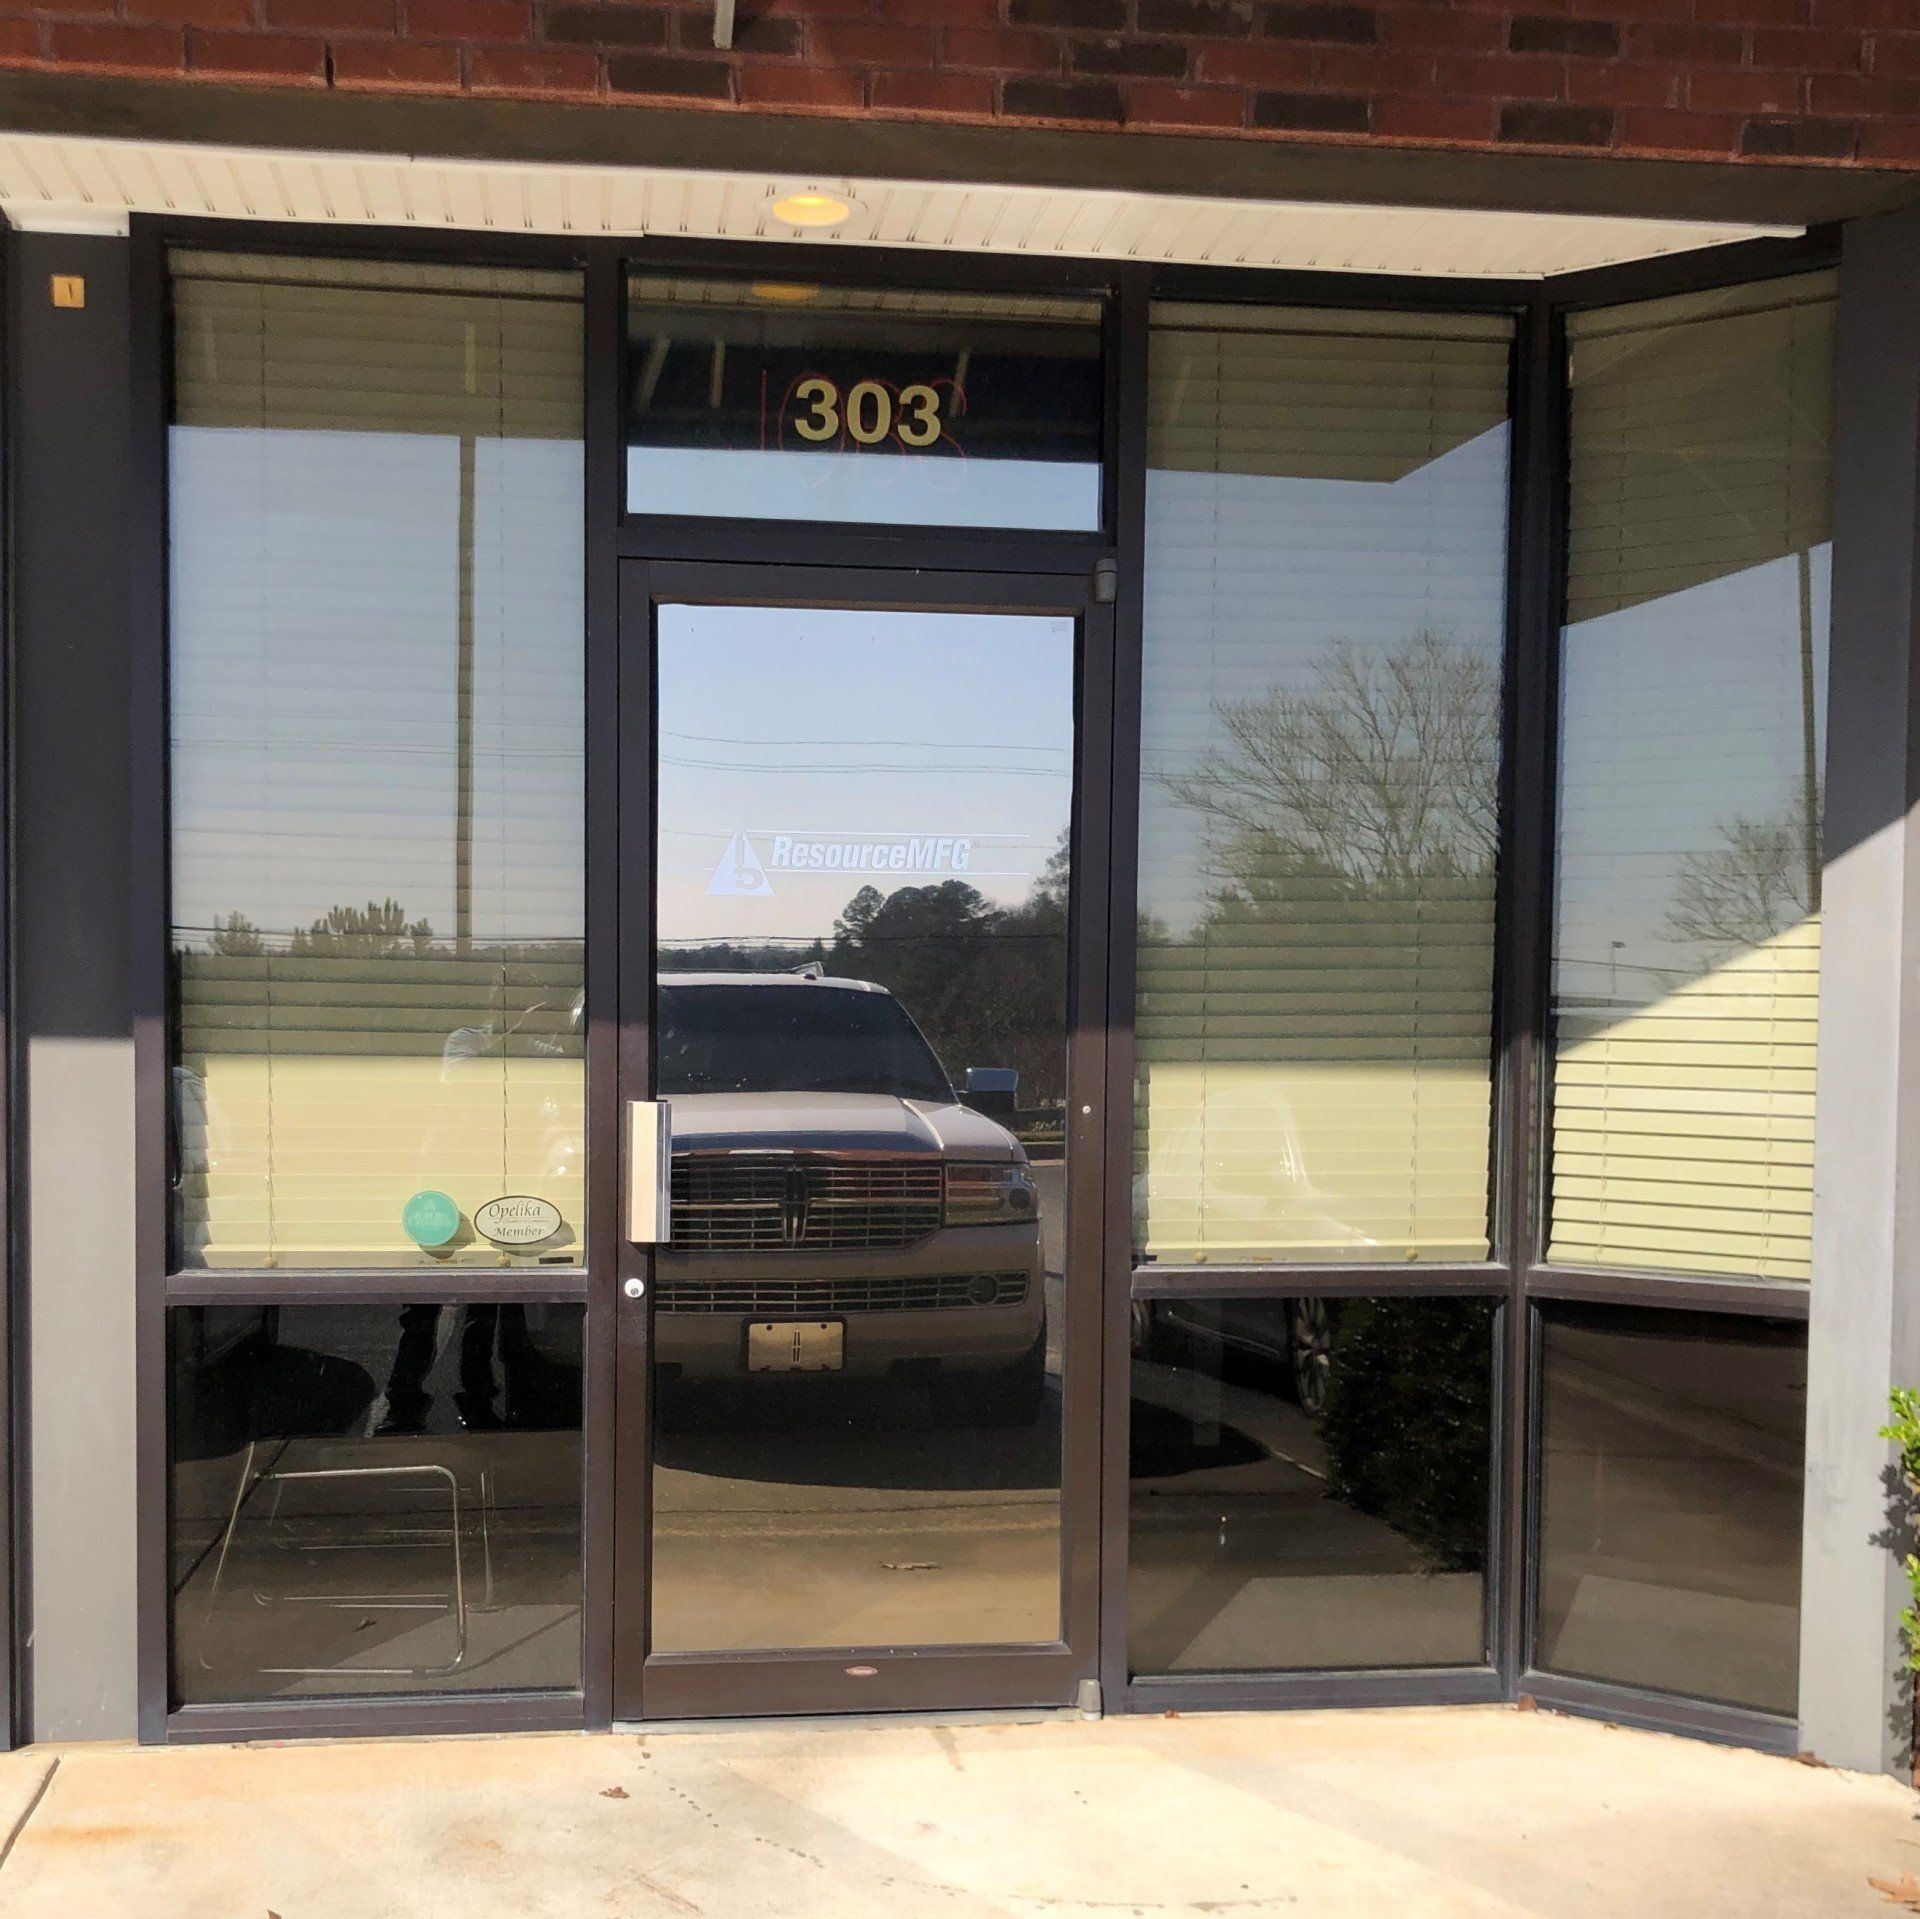 Business office tint in Auburn AL - SPF Leading Performance Office Tint Blocked Over 90% Heat and Sun Glare in Auburn AL